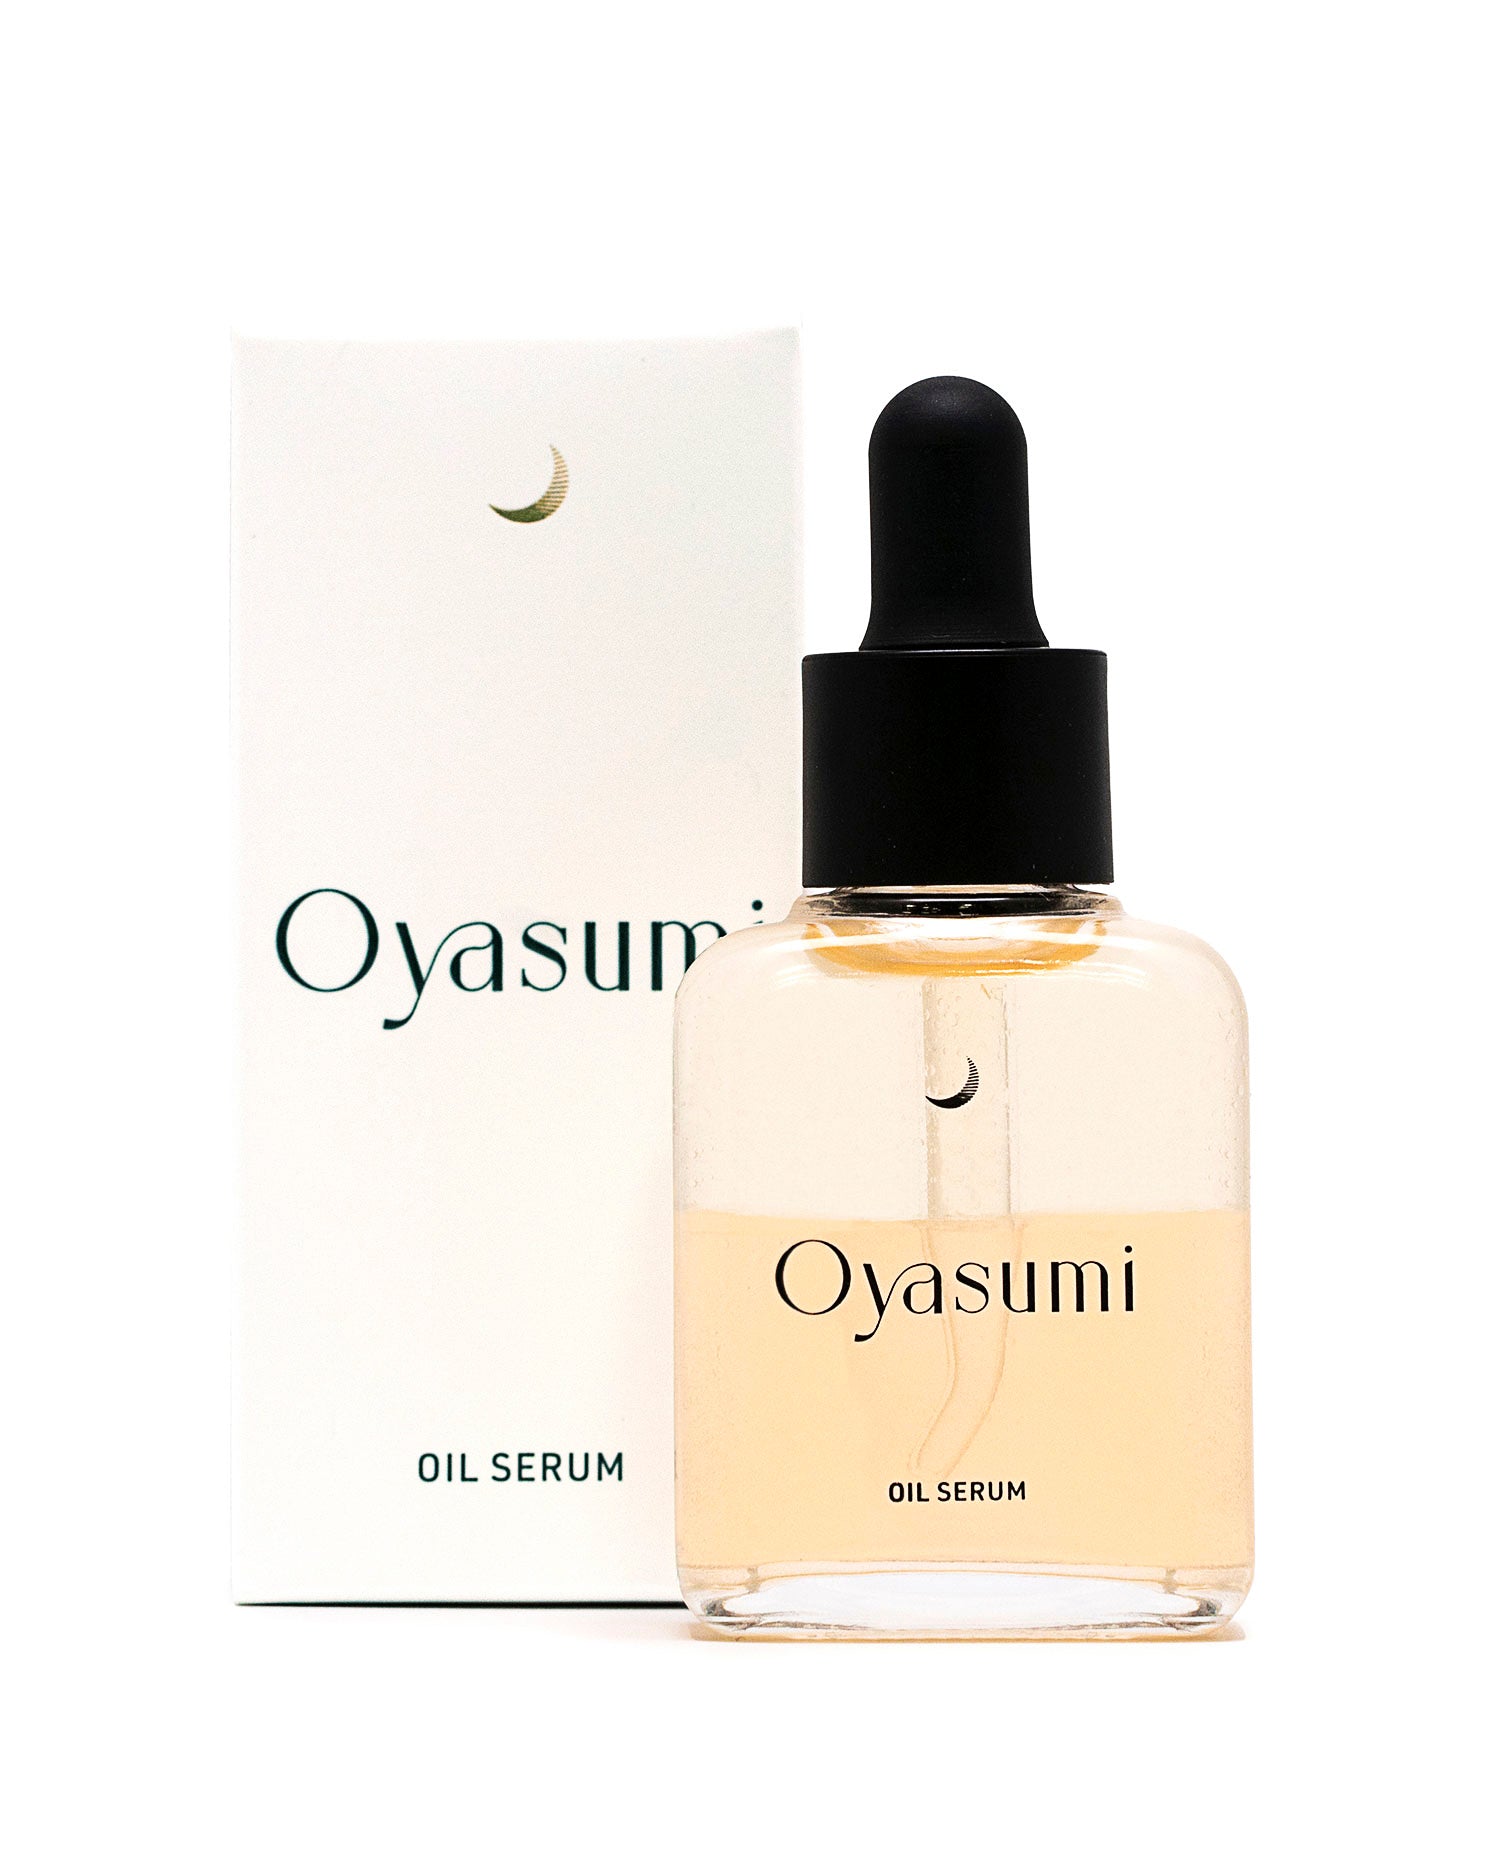 【定期購入】&lt;br&gt;Ohayo・Oyasumi&lt;br&gt;Oil Serum Set